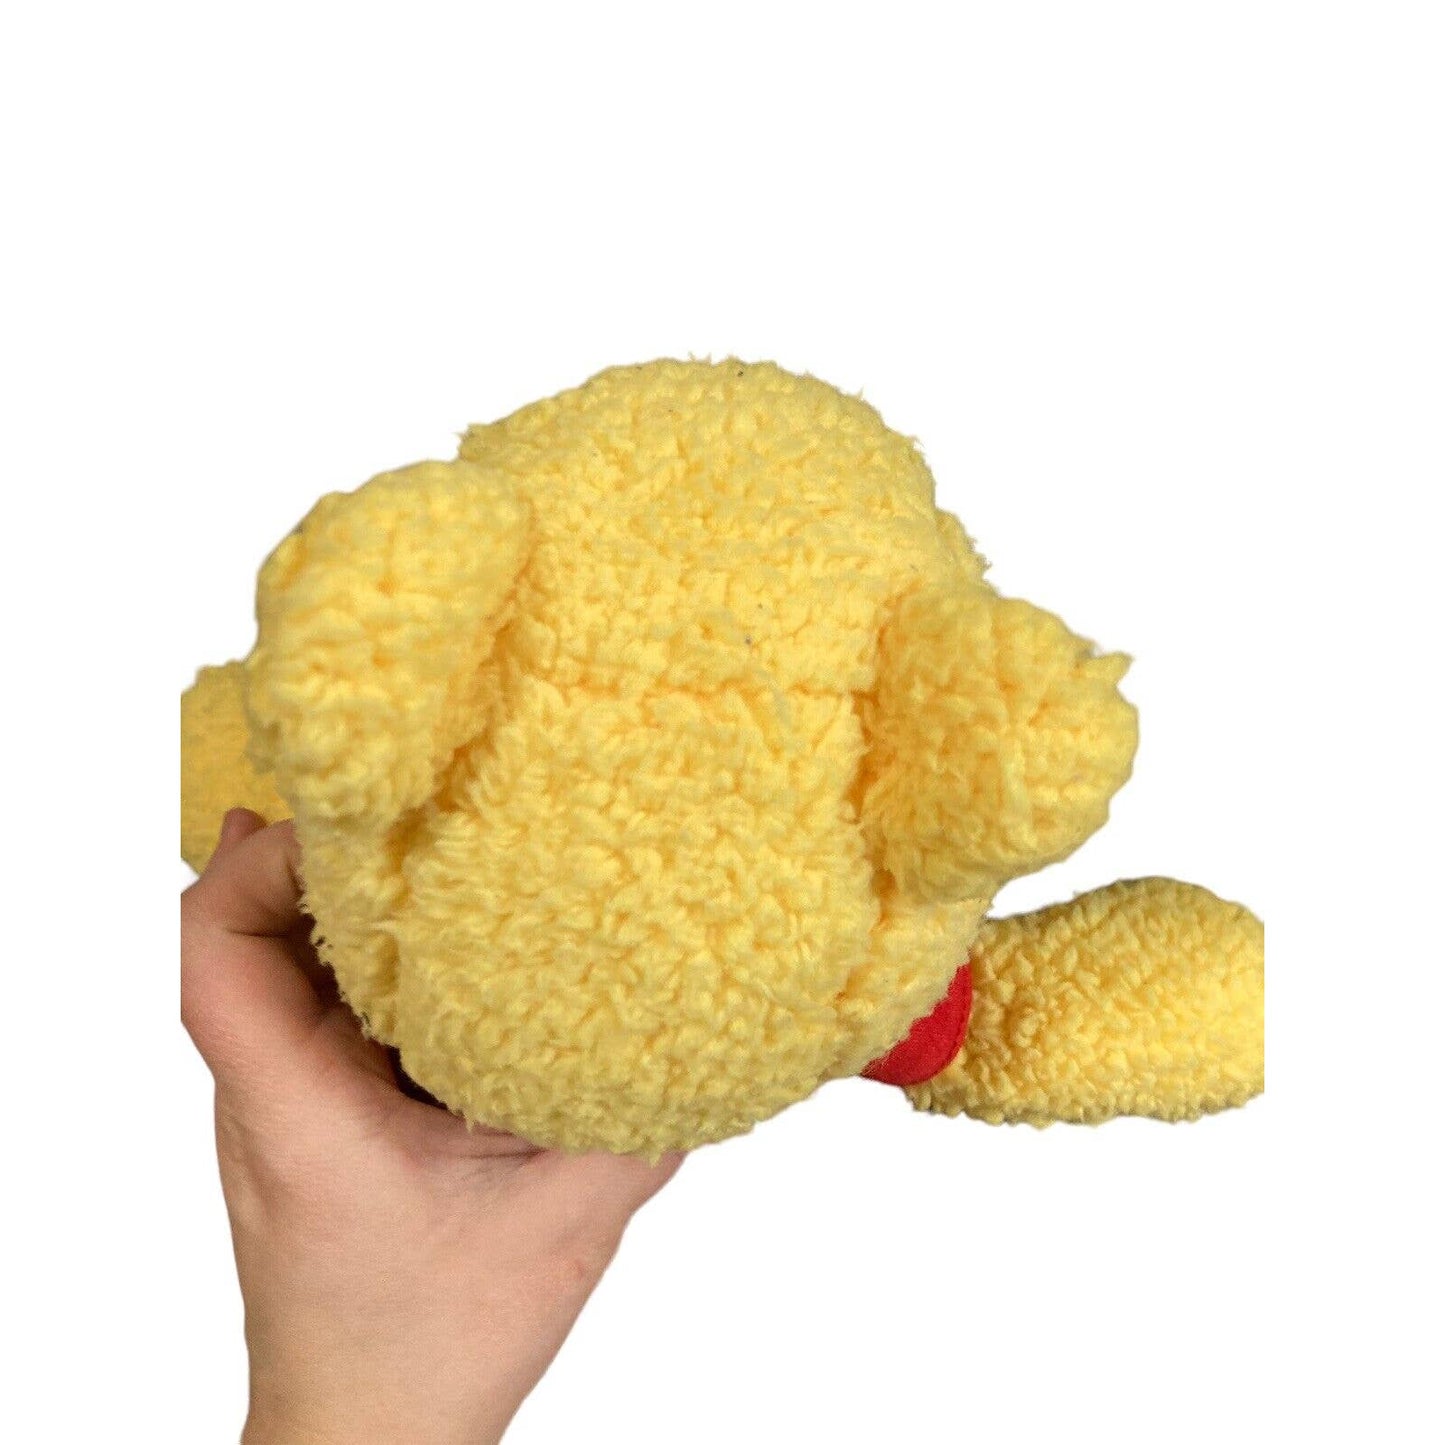 Disney Gund Winnie The Pooh Hunny Honey Pot Stuffed Plush Animal Toy 10” Vintage